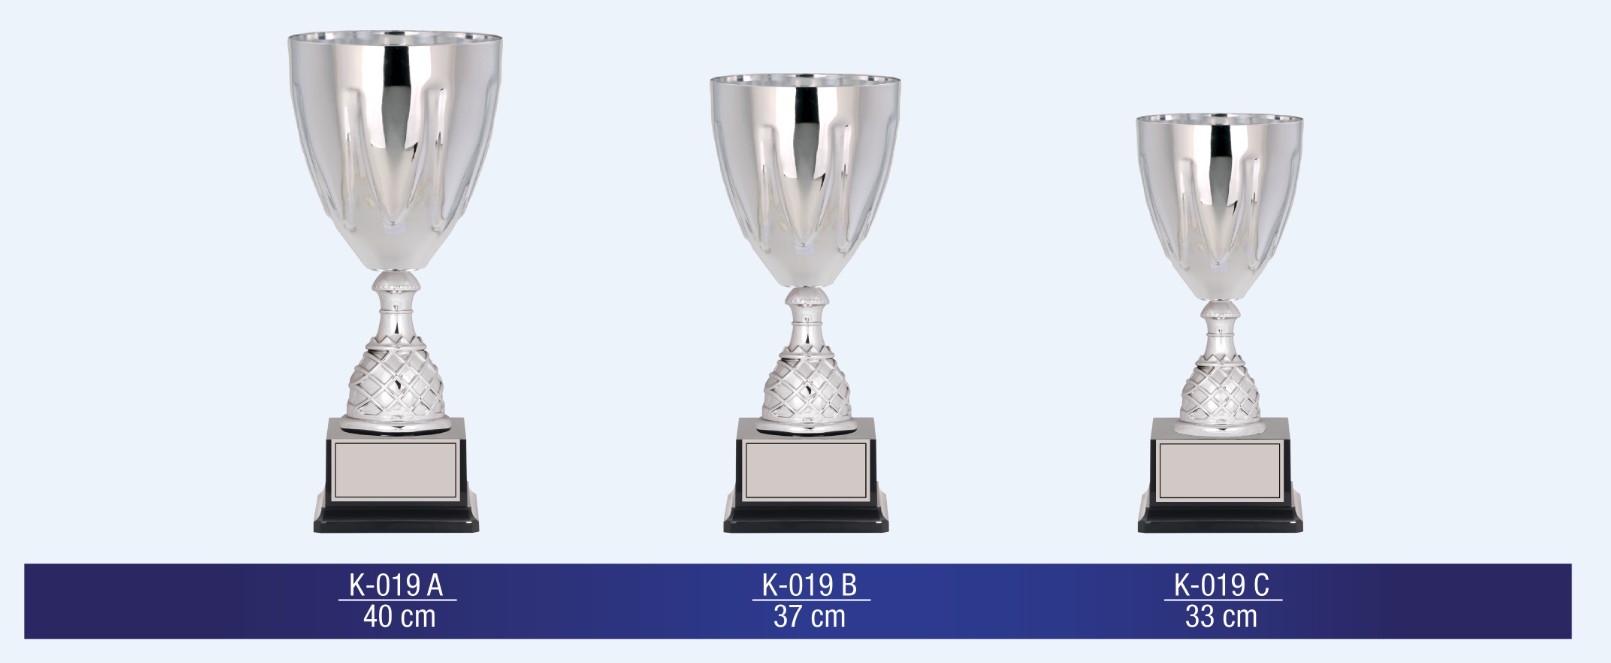 K-019 Elite Cup